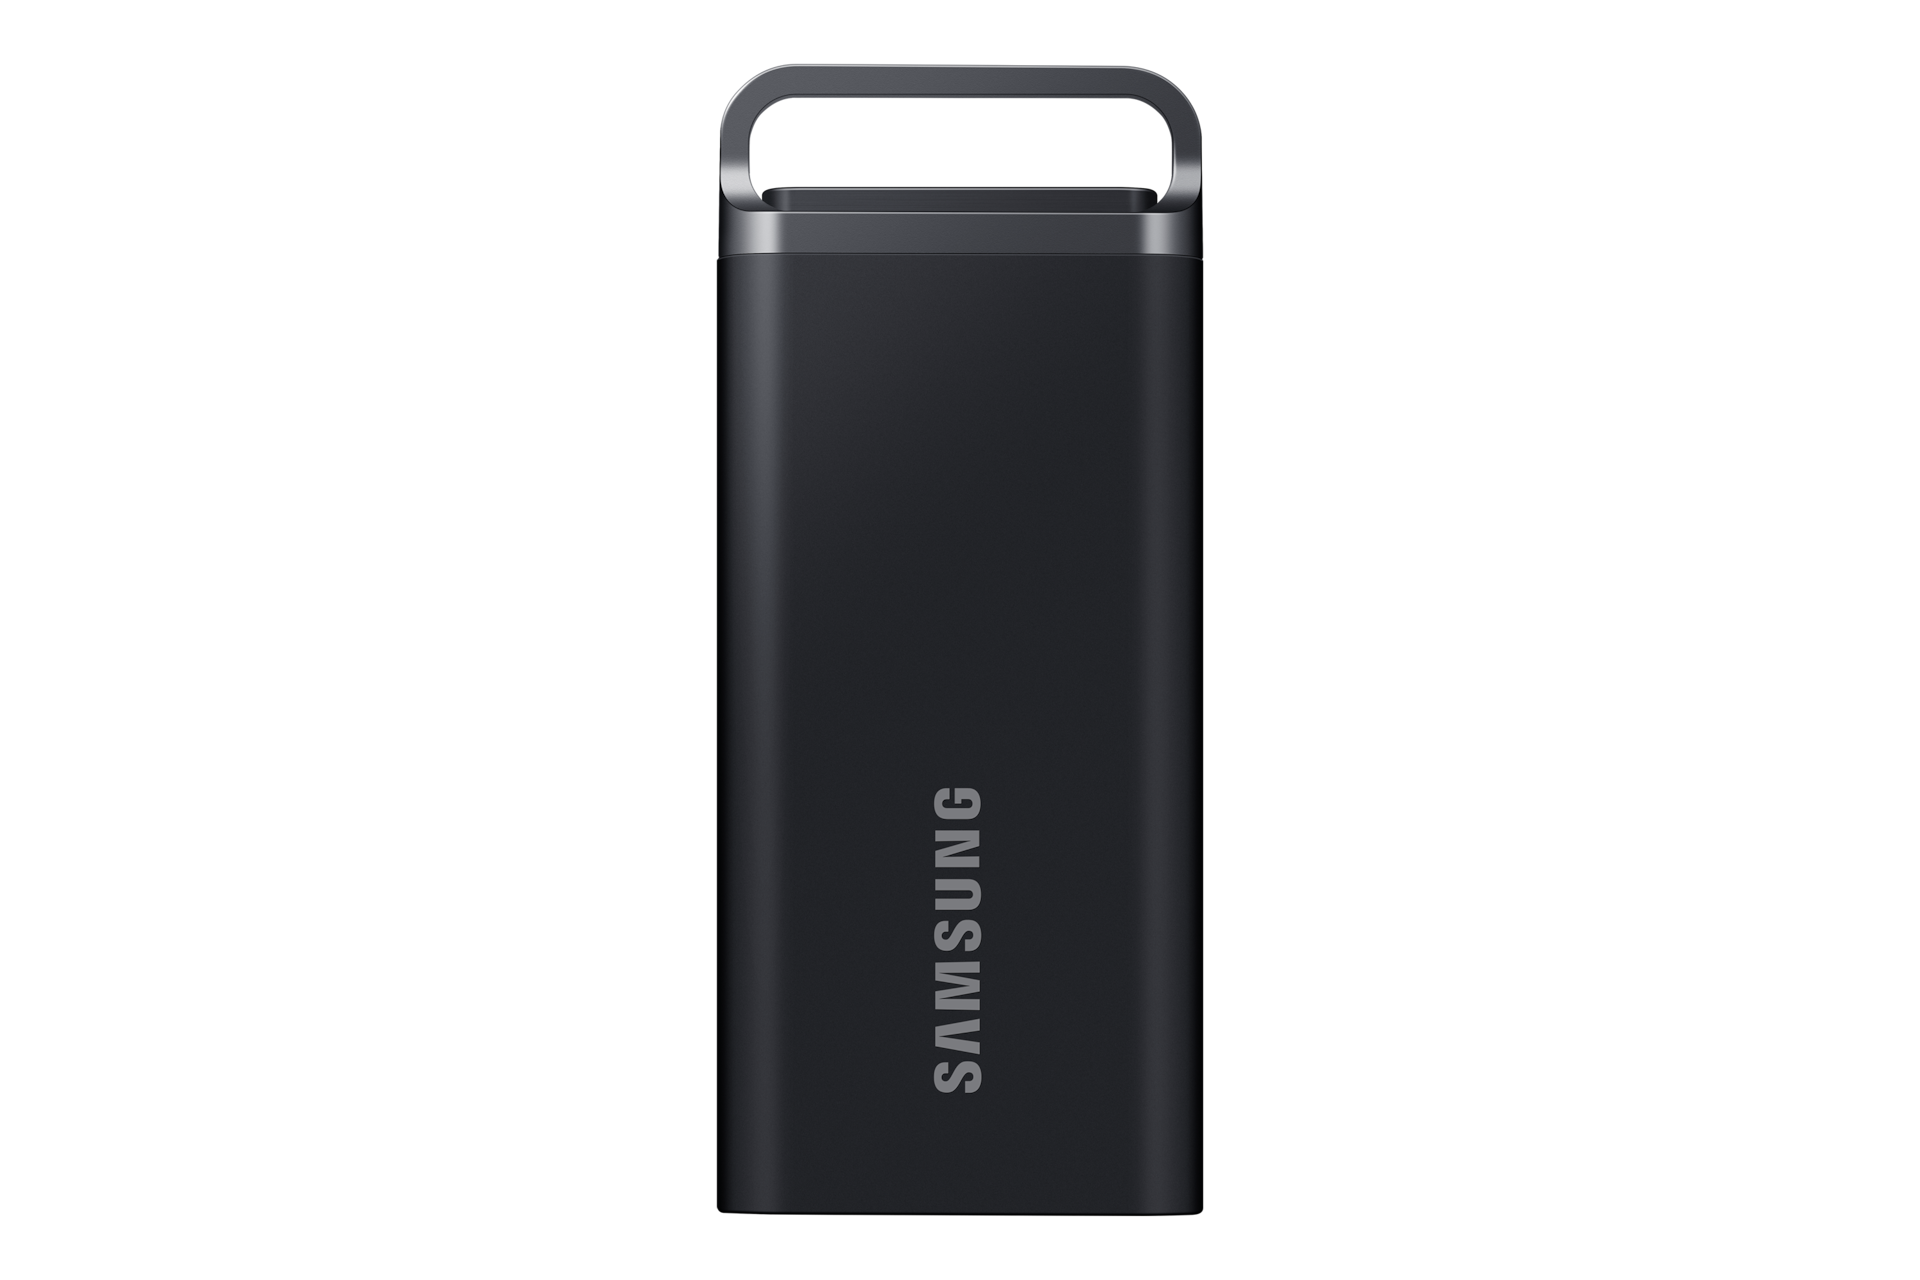 Samsung T7 Touch 1To Black (MU-PC1T0K/WW) - Achat / Vente Disque